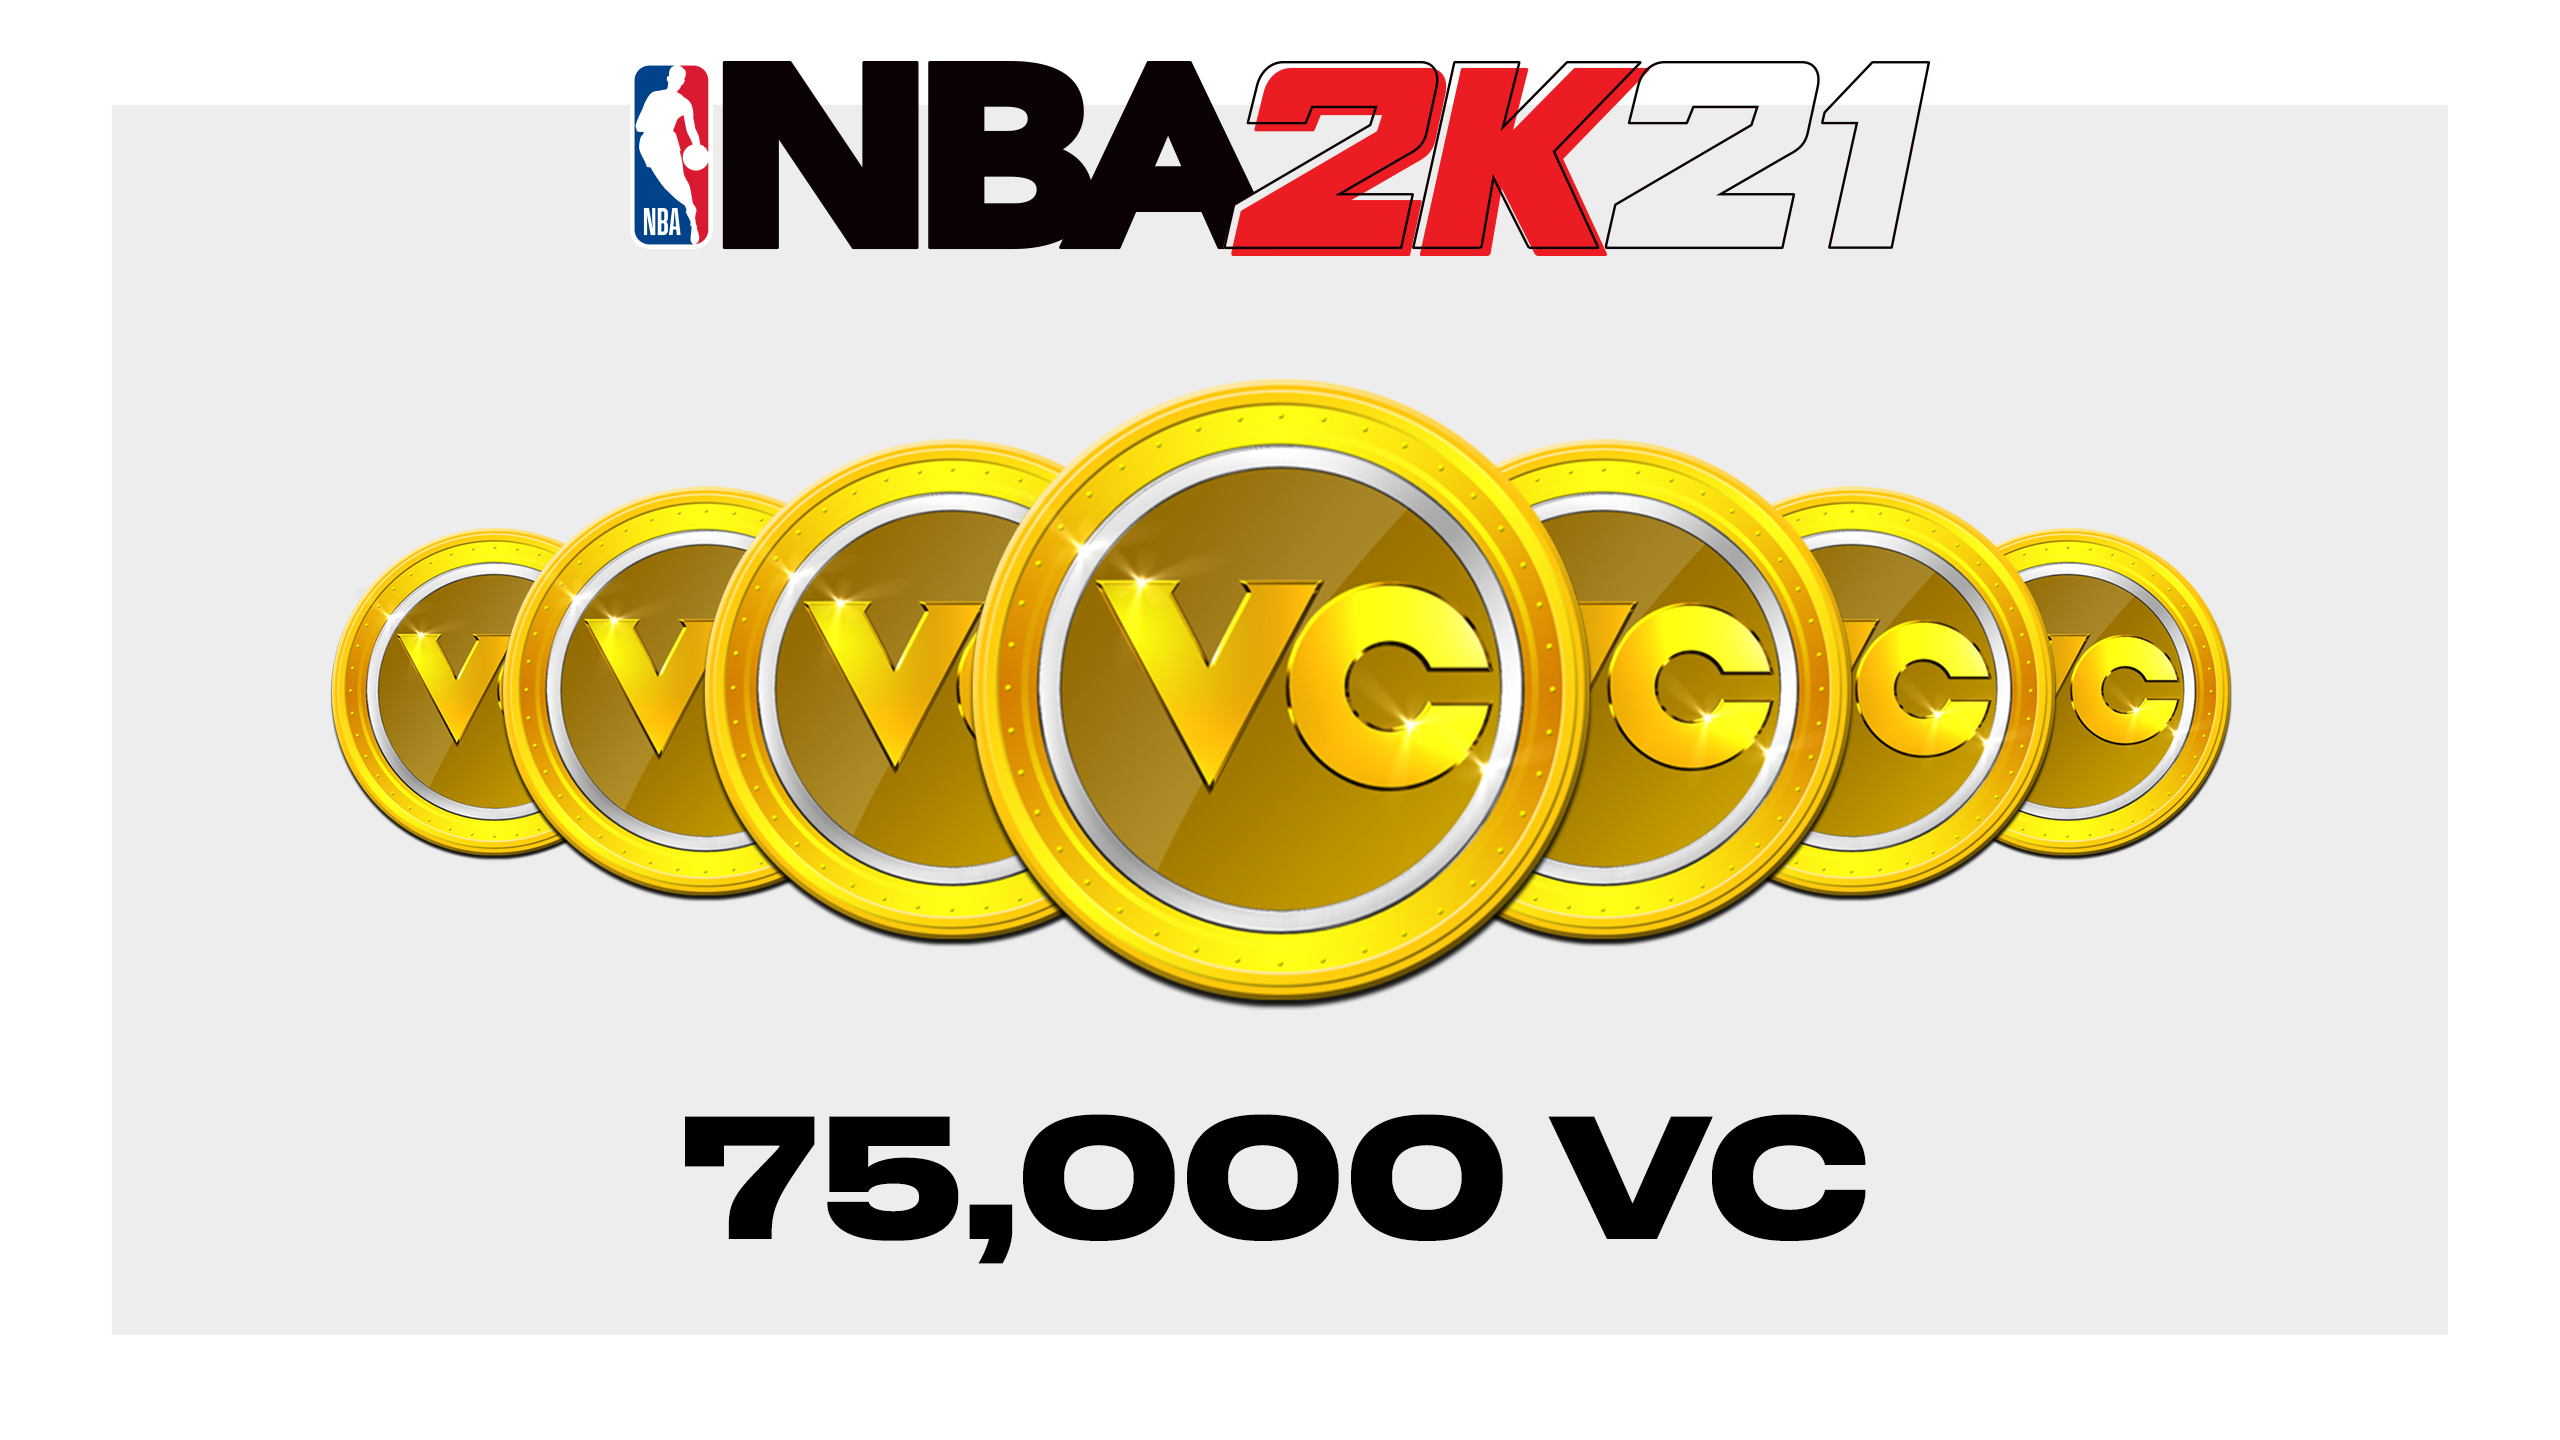 《NBA2K》因抽卡内购系统面临集体诉讼 原告要求至少500万美元的损害赔偿